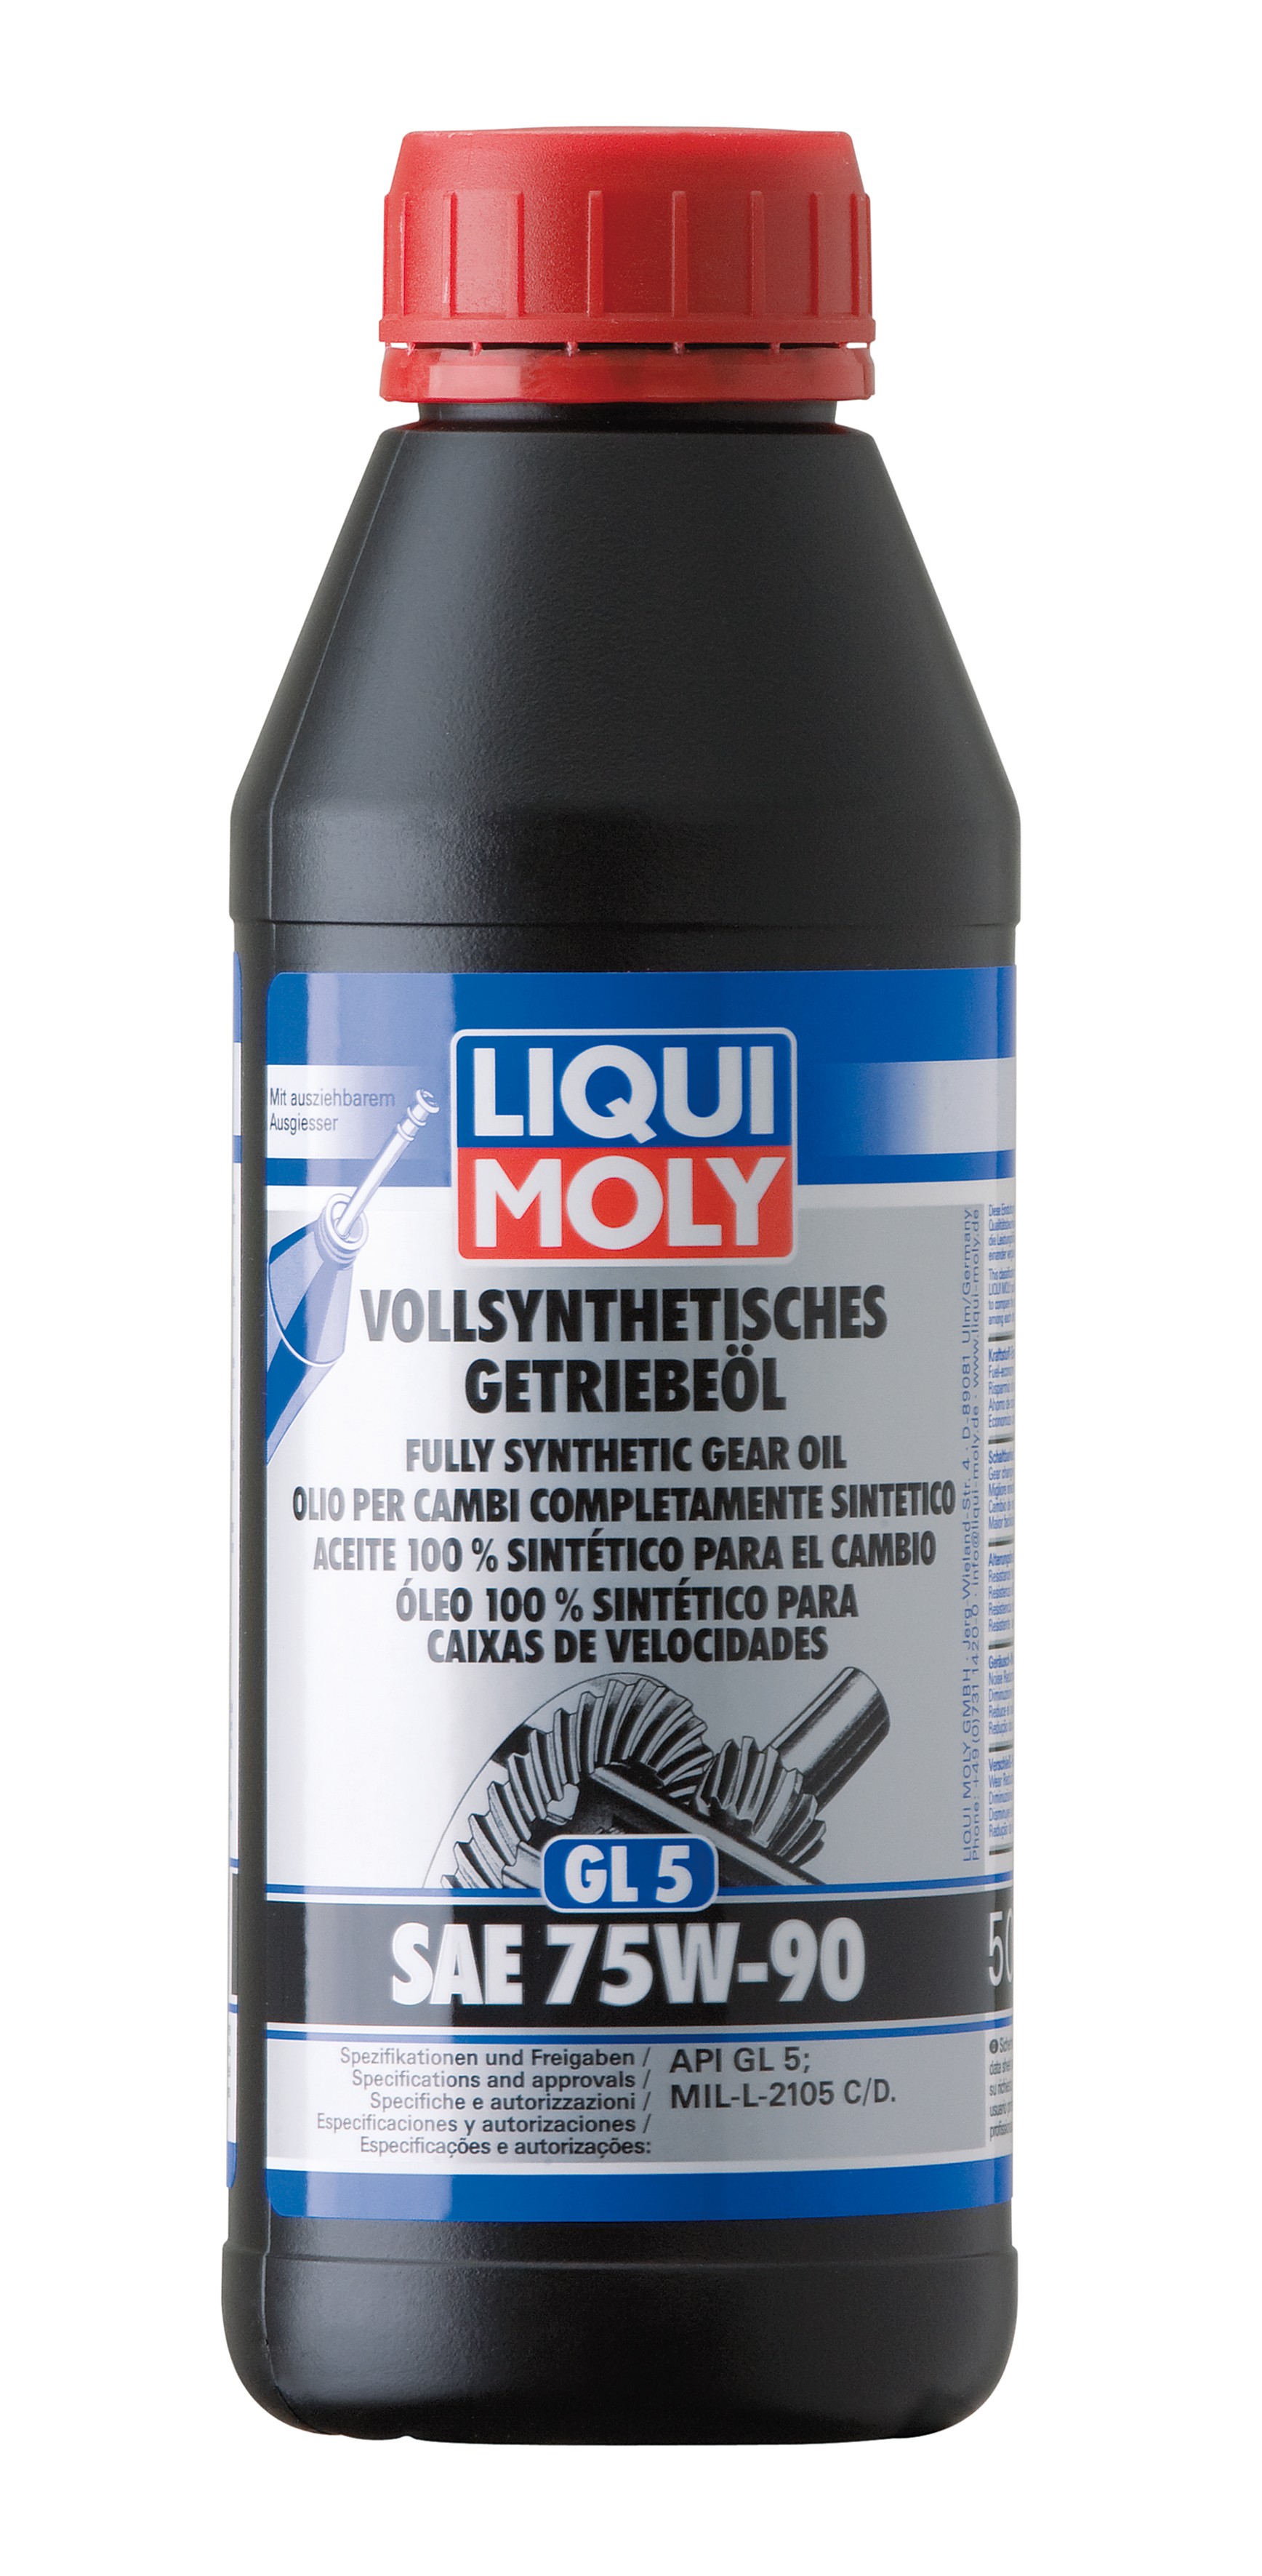  Moly 1413 Vollsynthetisches Getriebeöl (GL5) SAE